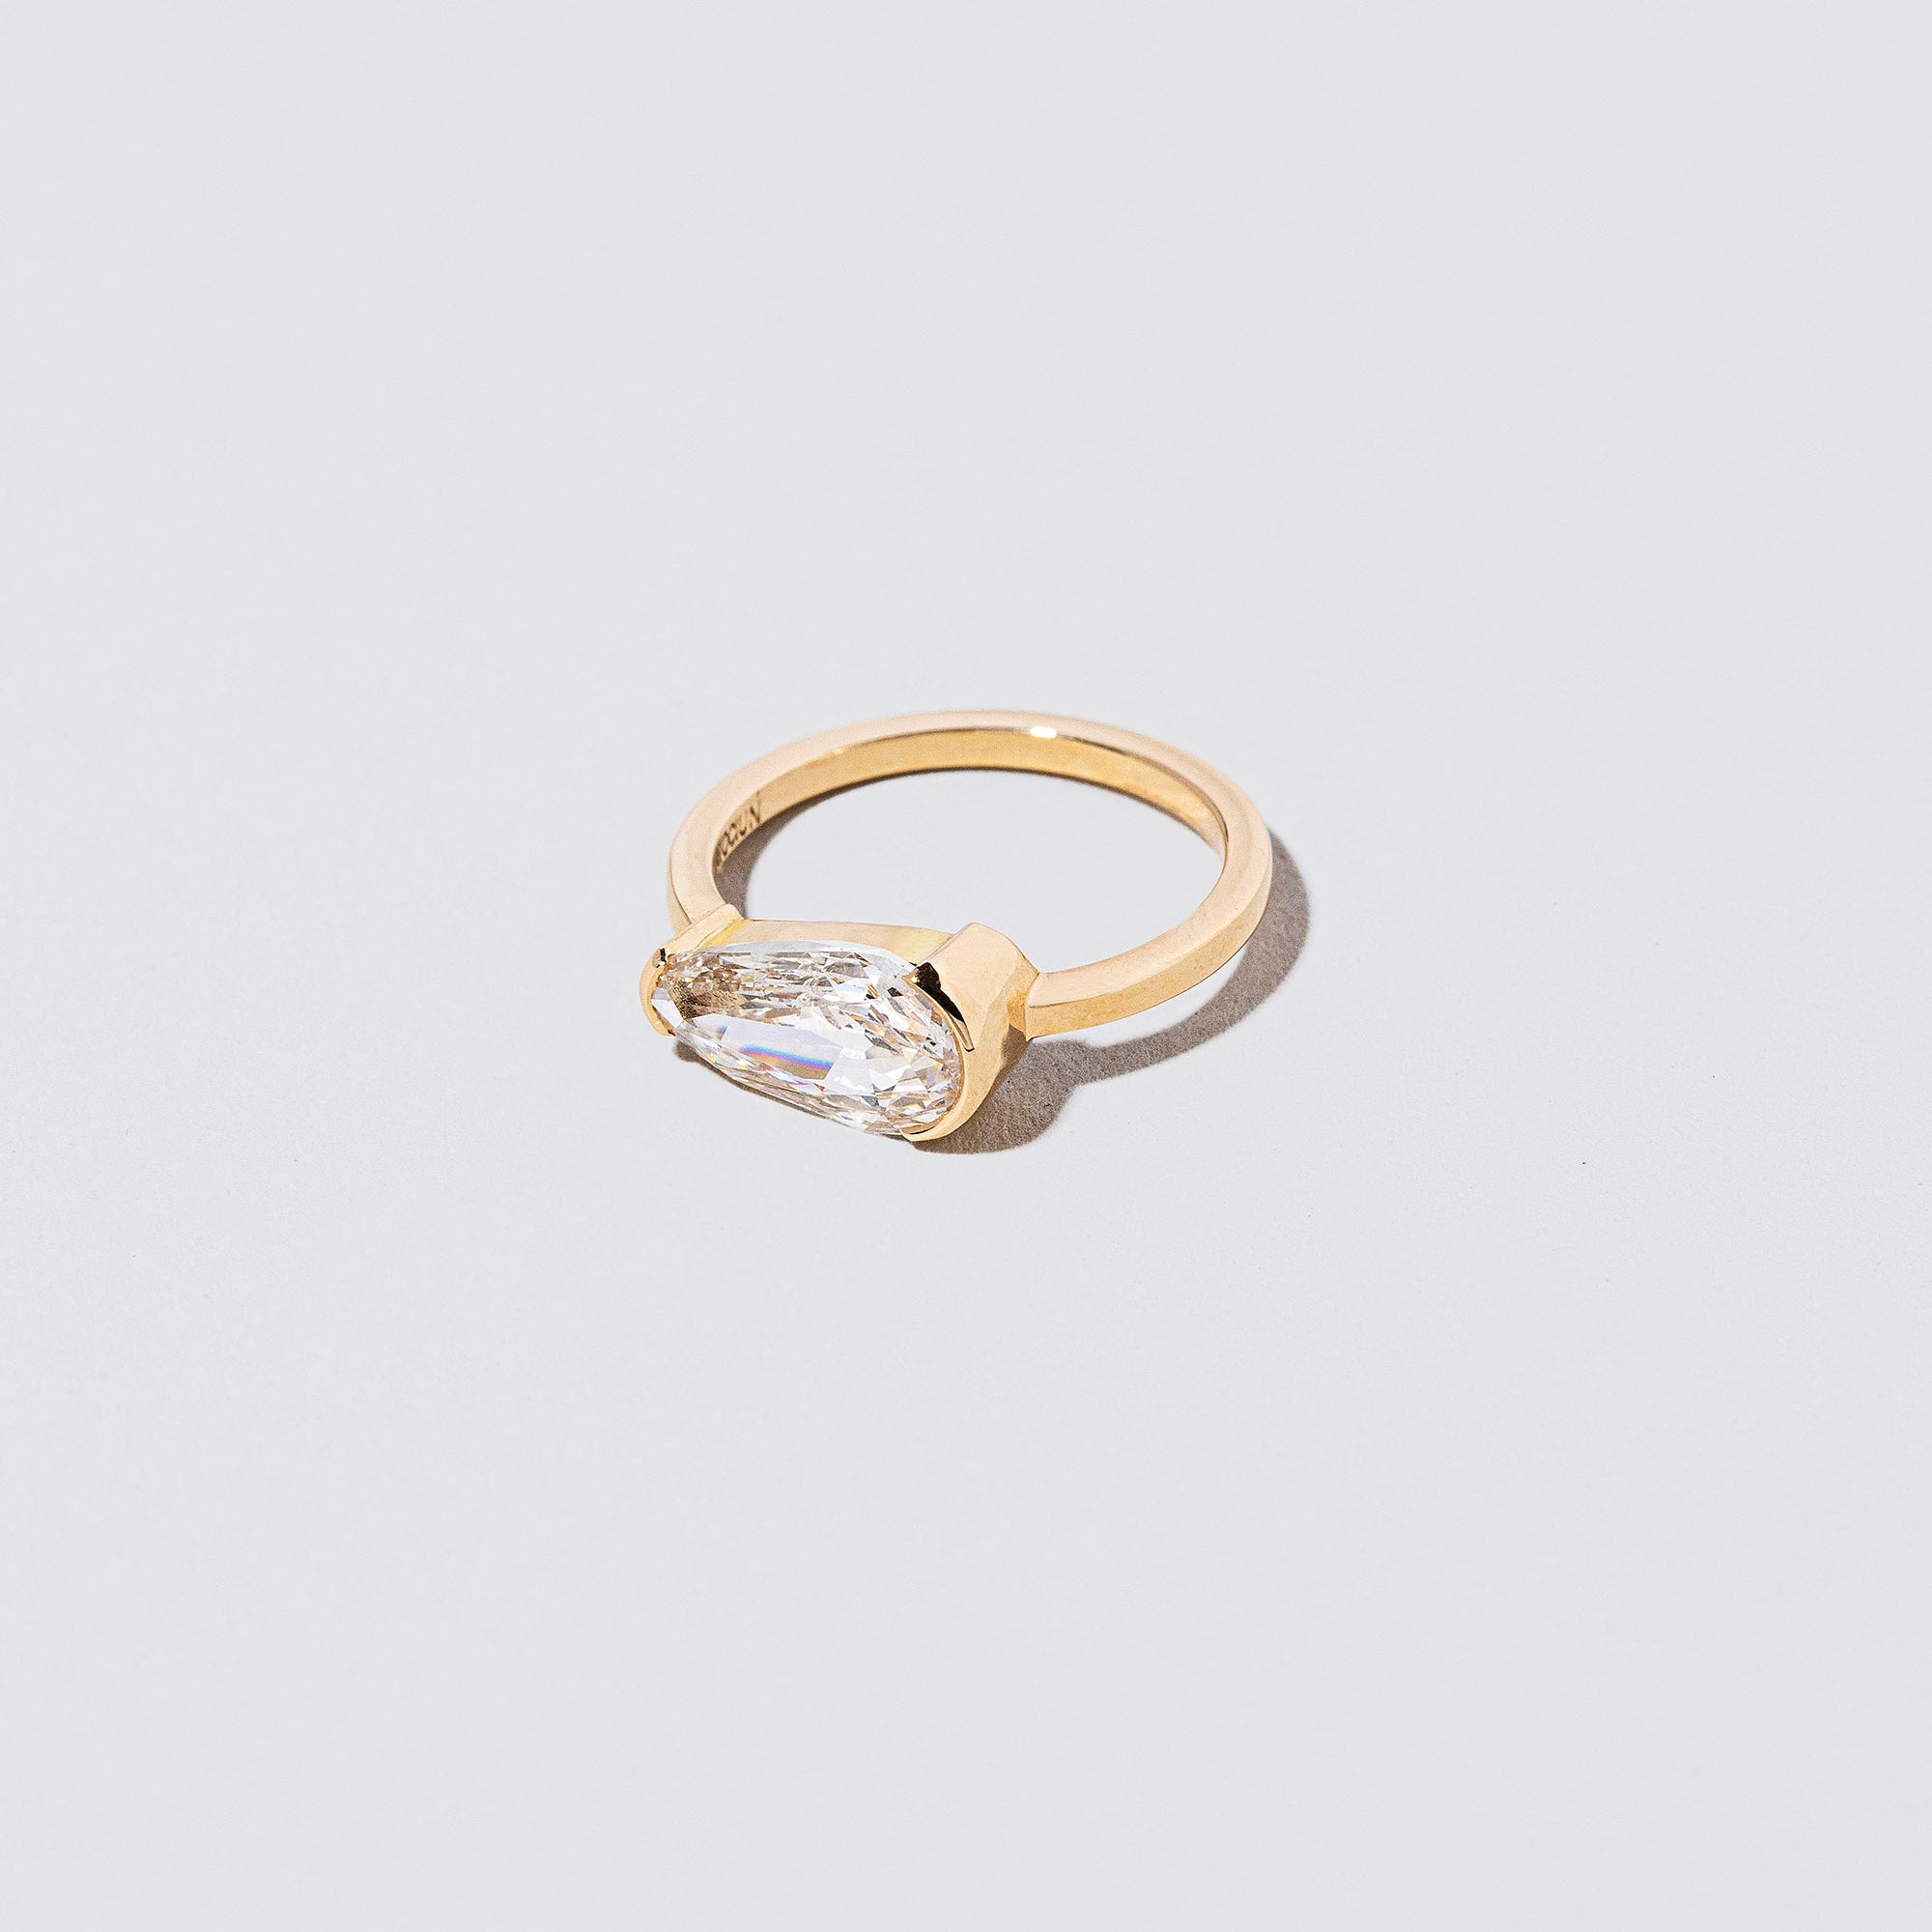 product_details:: Divination Ring on light color background.